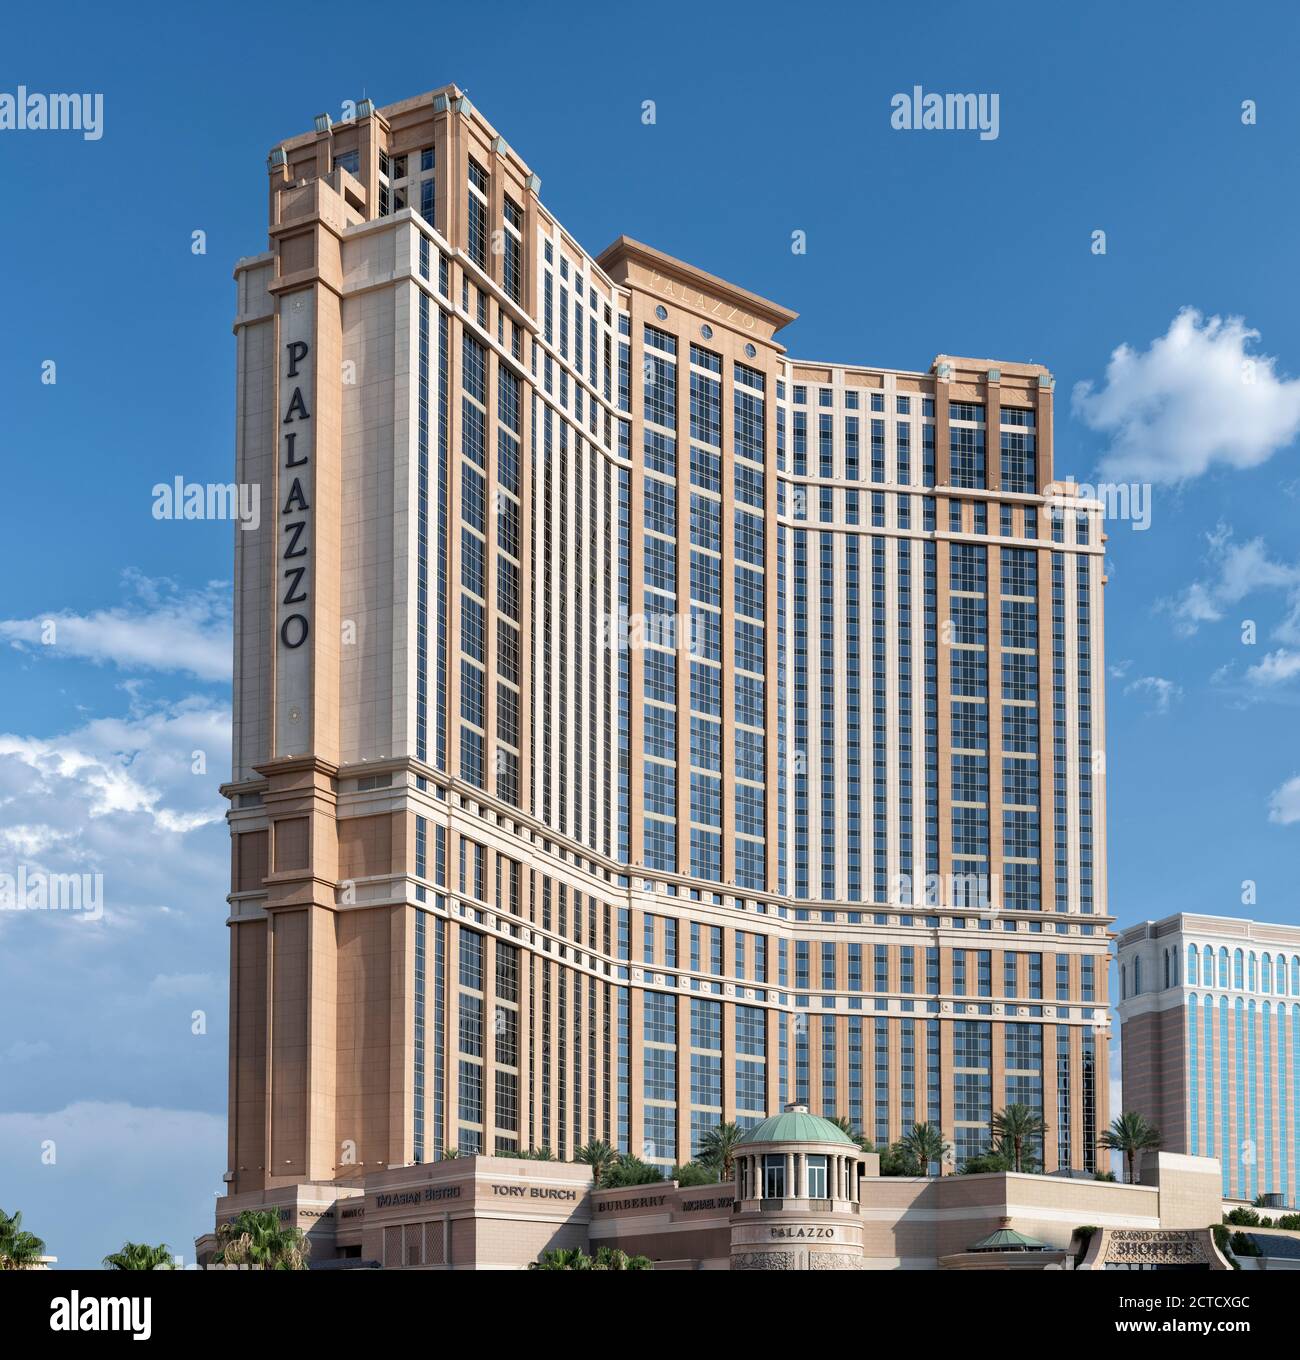 Exterior view of the Hotel Palazzo, Las Vegas, Nevada, USA. Stock Photo